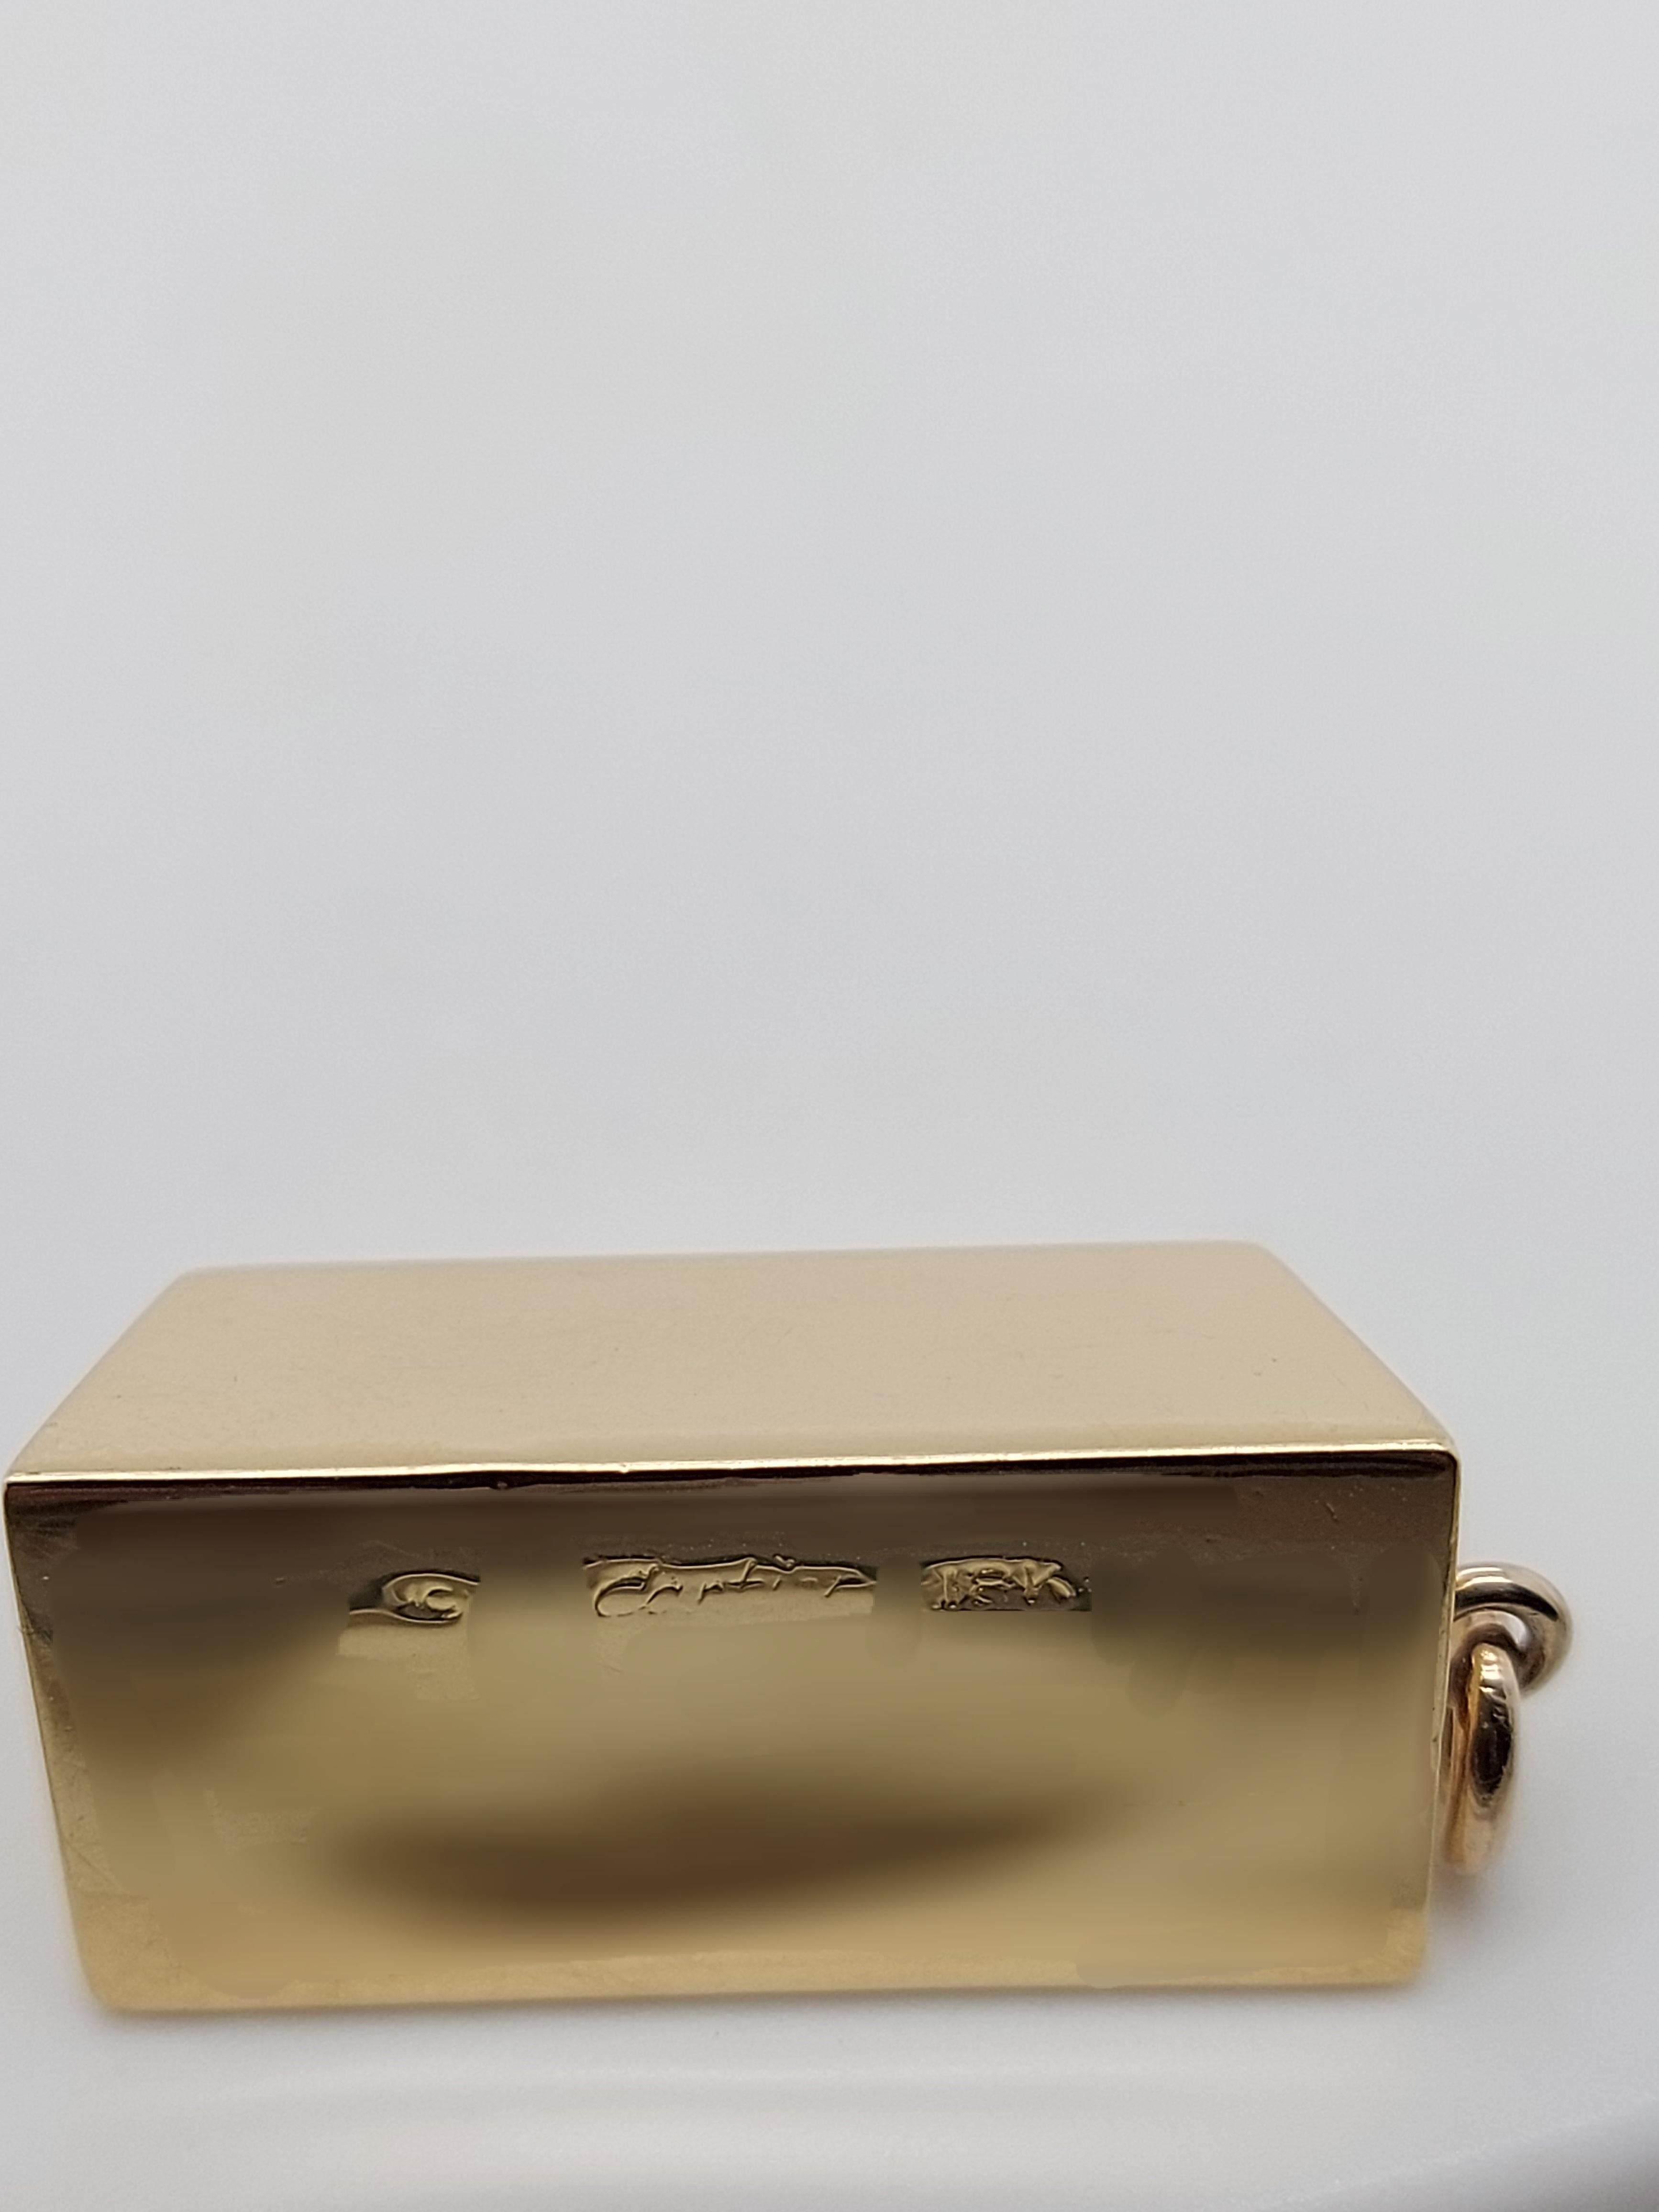 Cartier 1 oz Ingot Brick Bar Solid 18 Karat Gold Charm or Pendant from 1970s 5